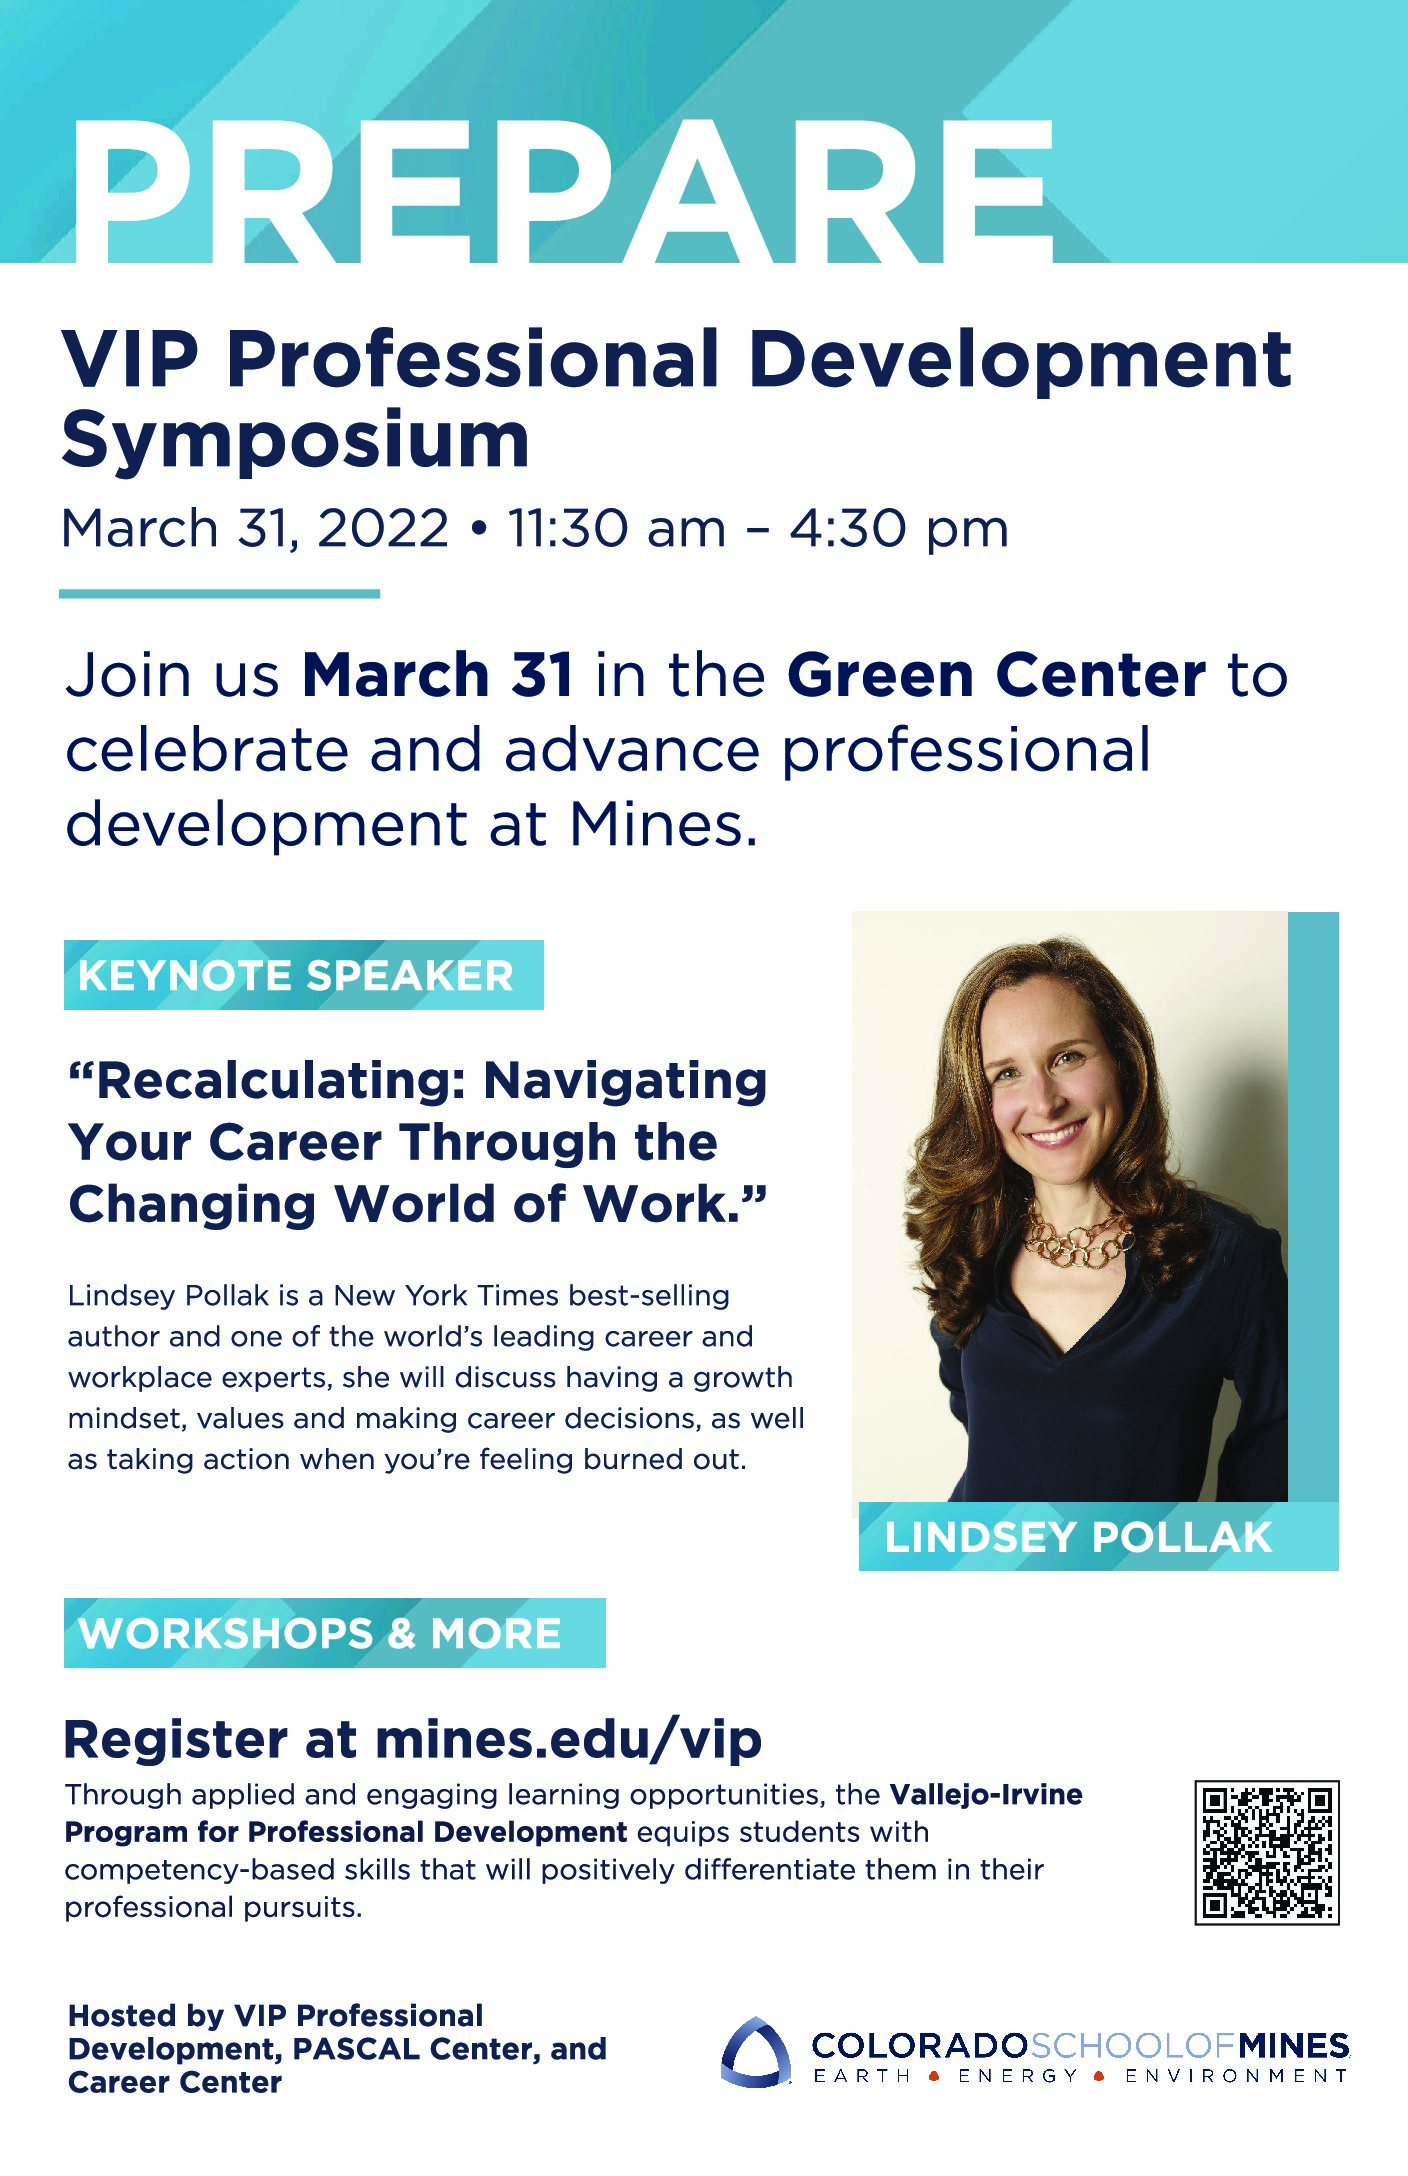 VIP Professional Development Symposium on March 31st